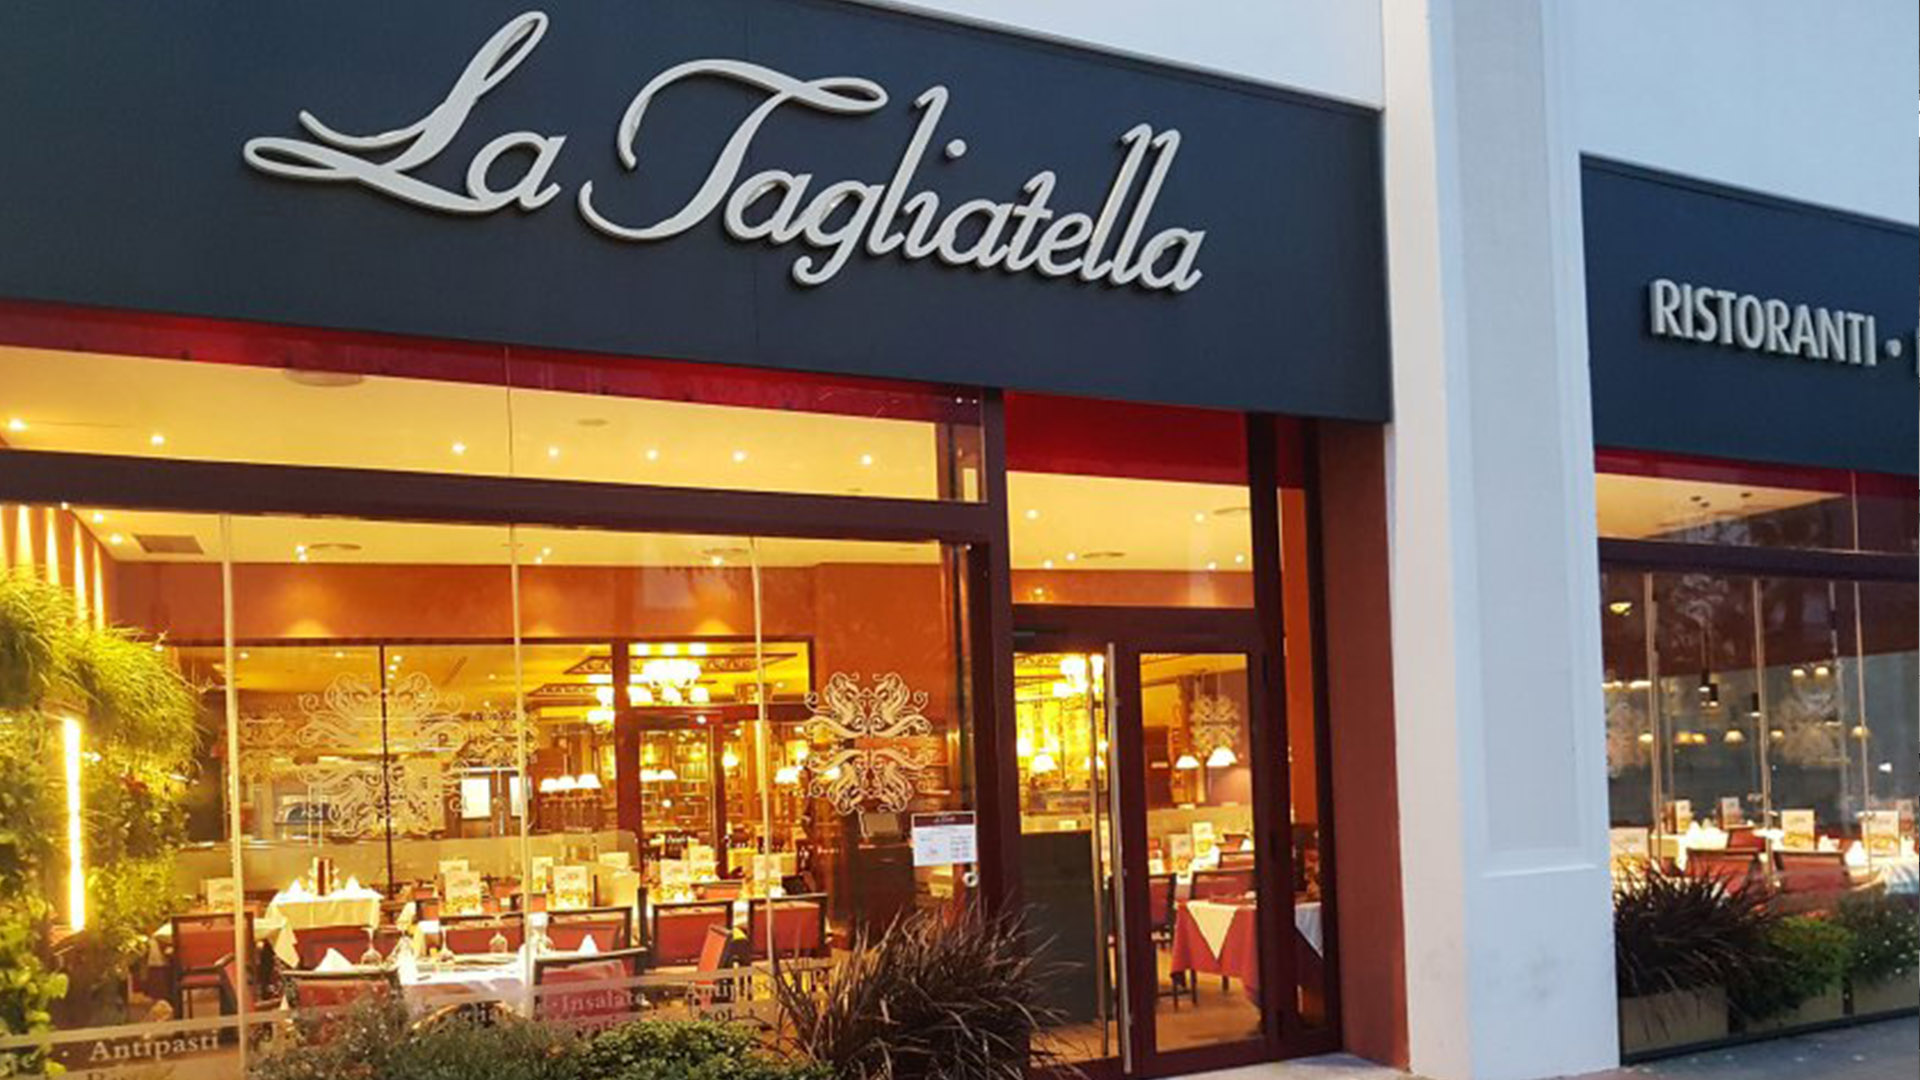 Fachada del restaurante de comida italiana "La Tagliatella" en Finestrat